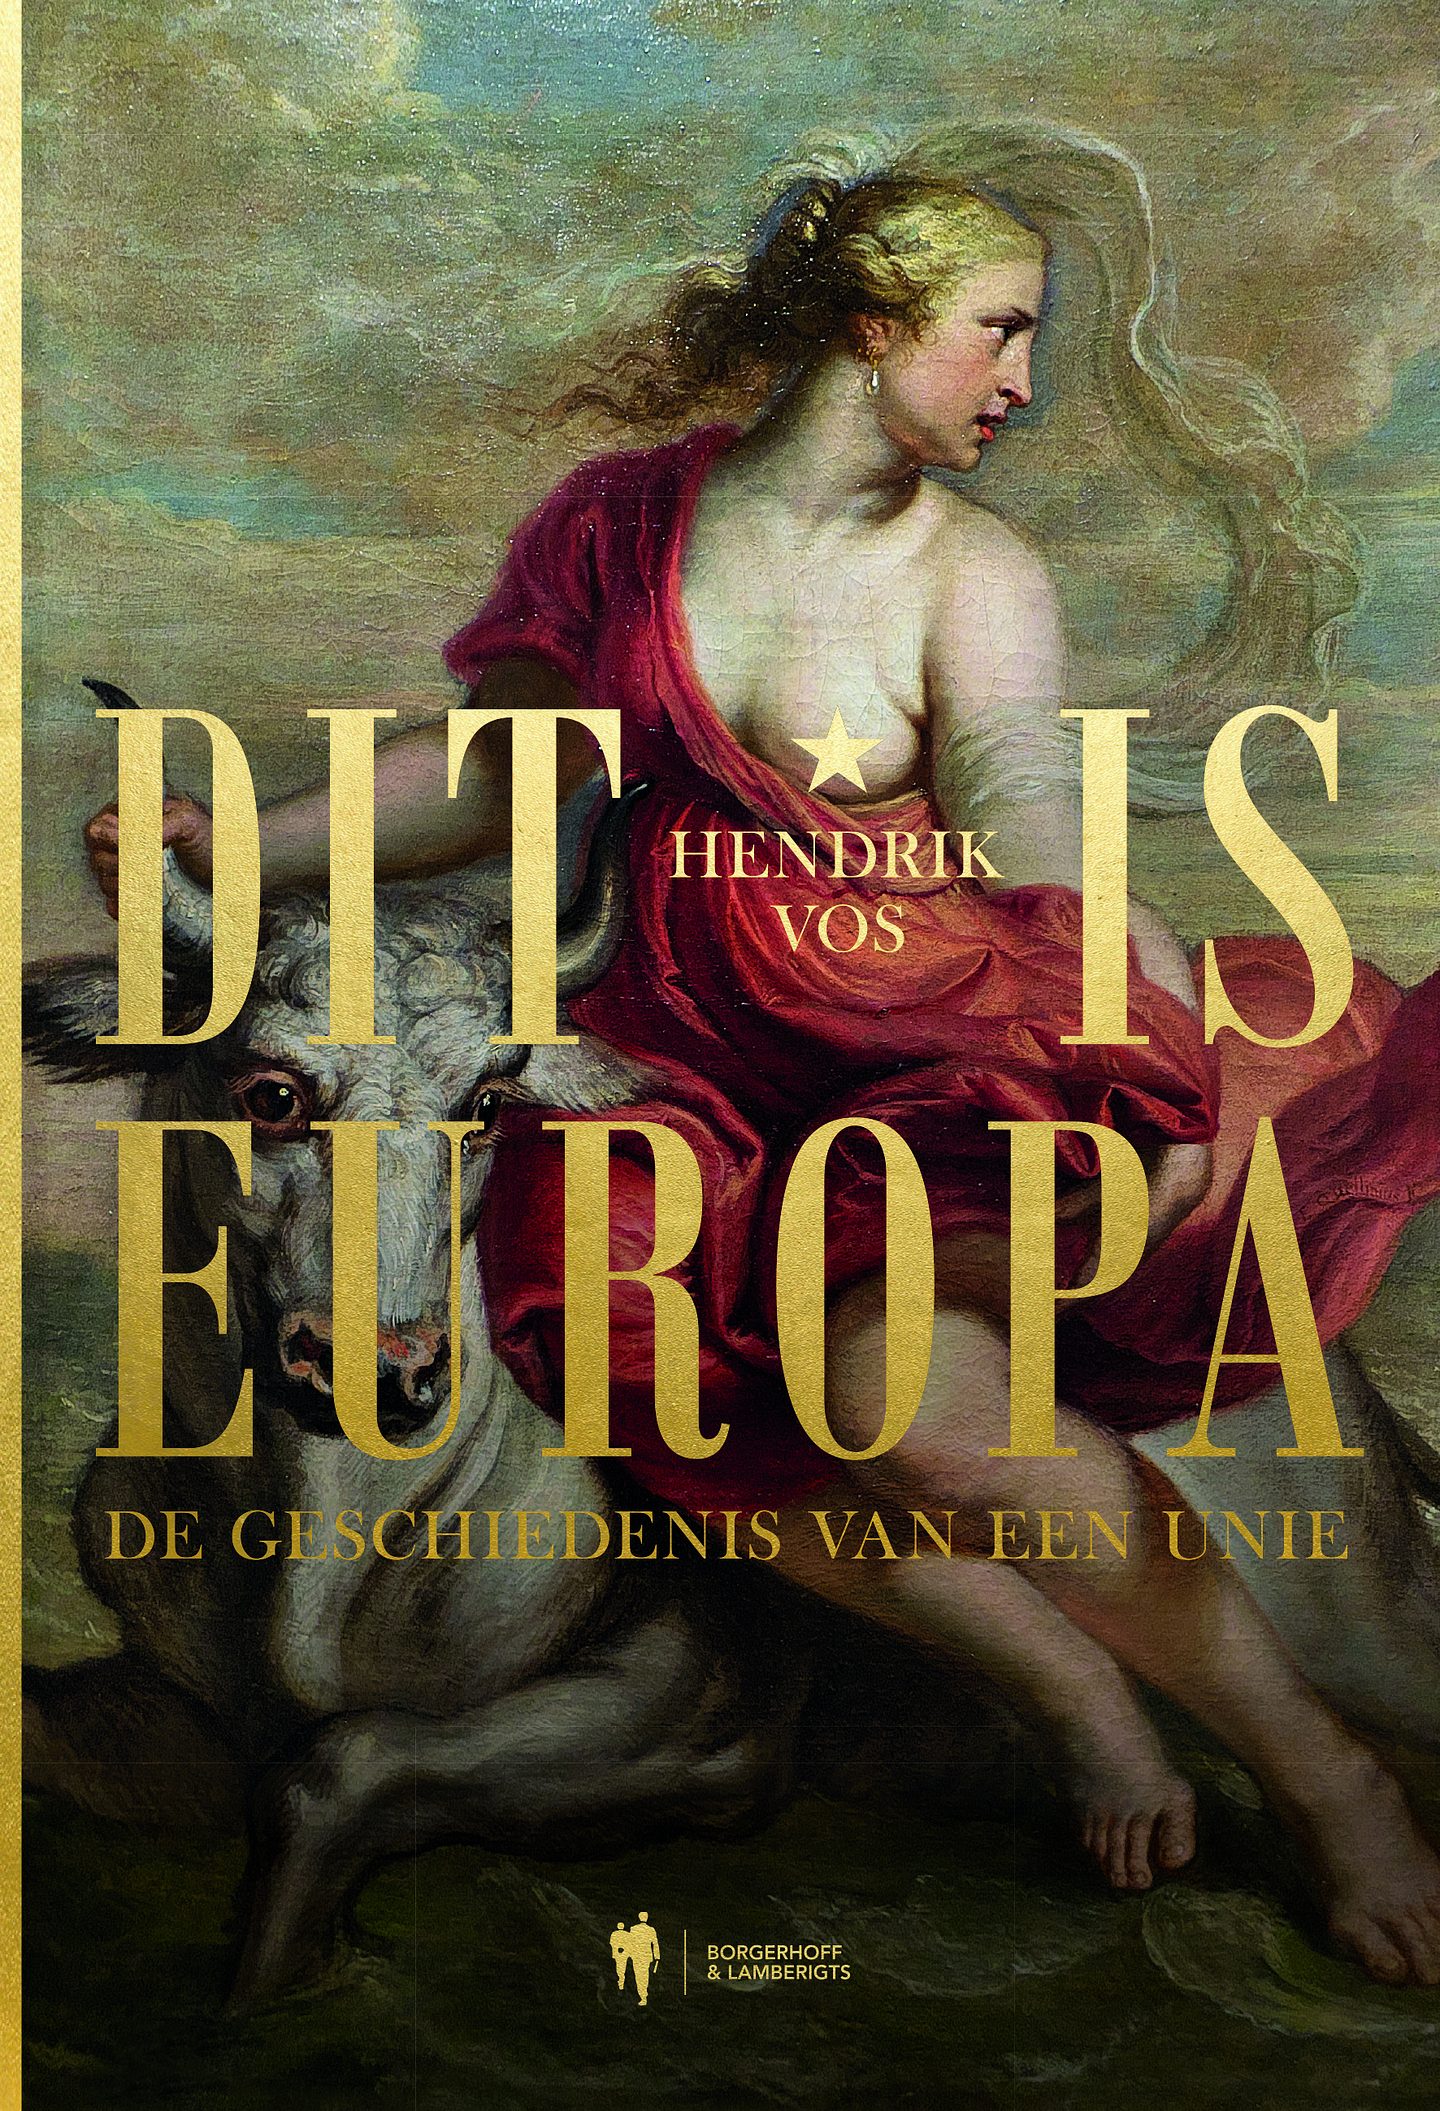 COVER EUROPA